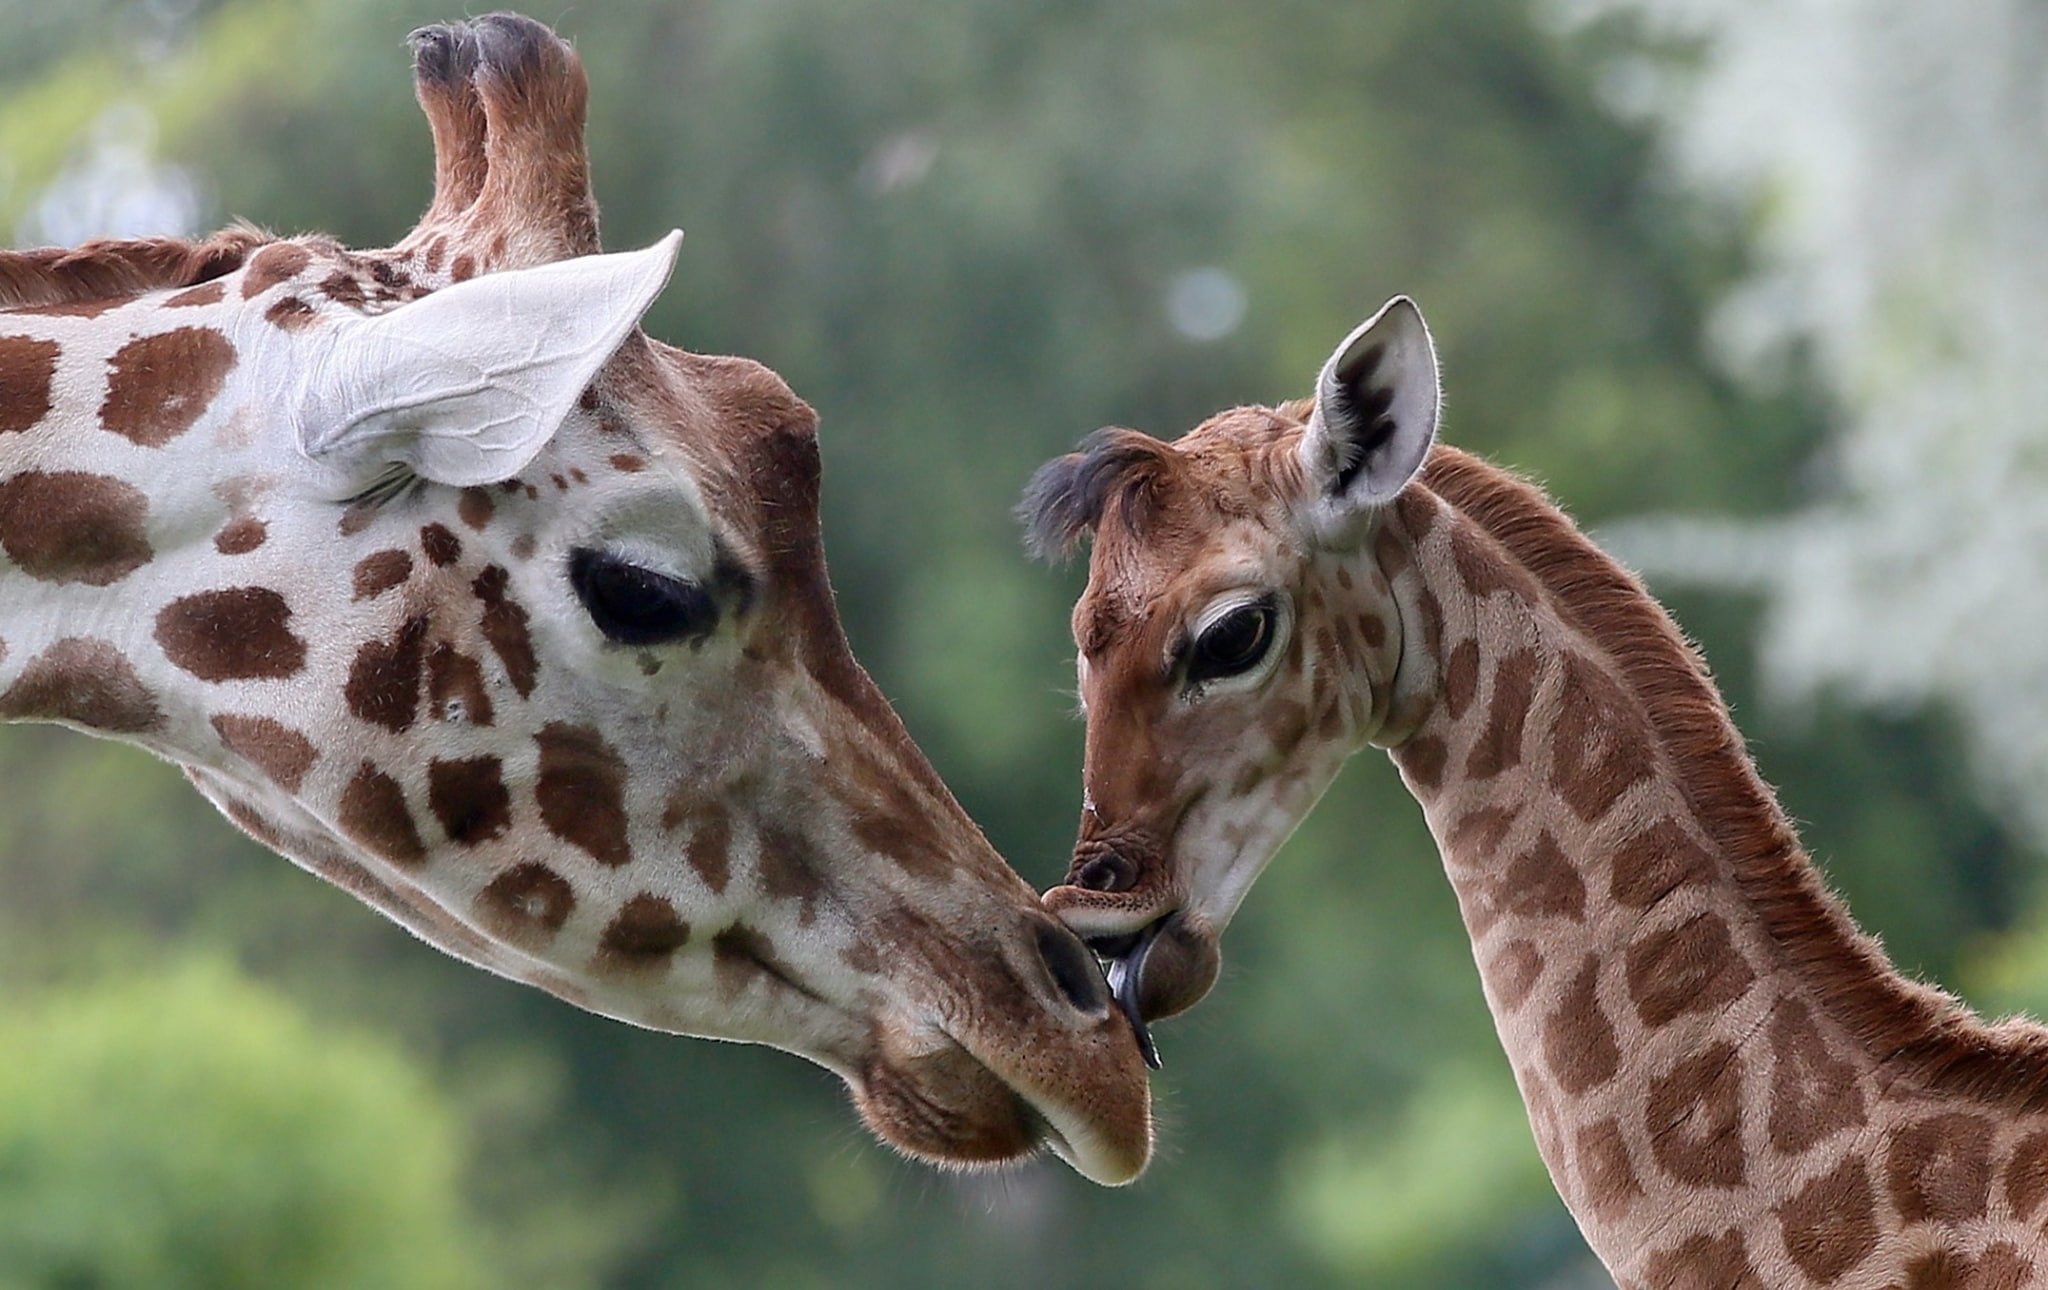 giraffe images for desktop background, animal wildlife, group of animals